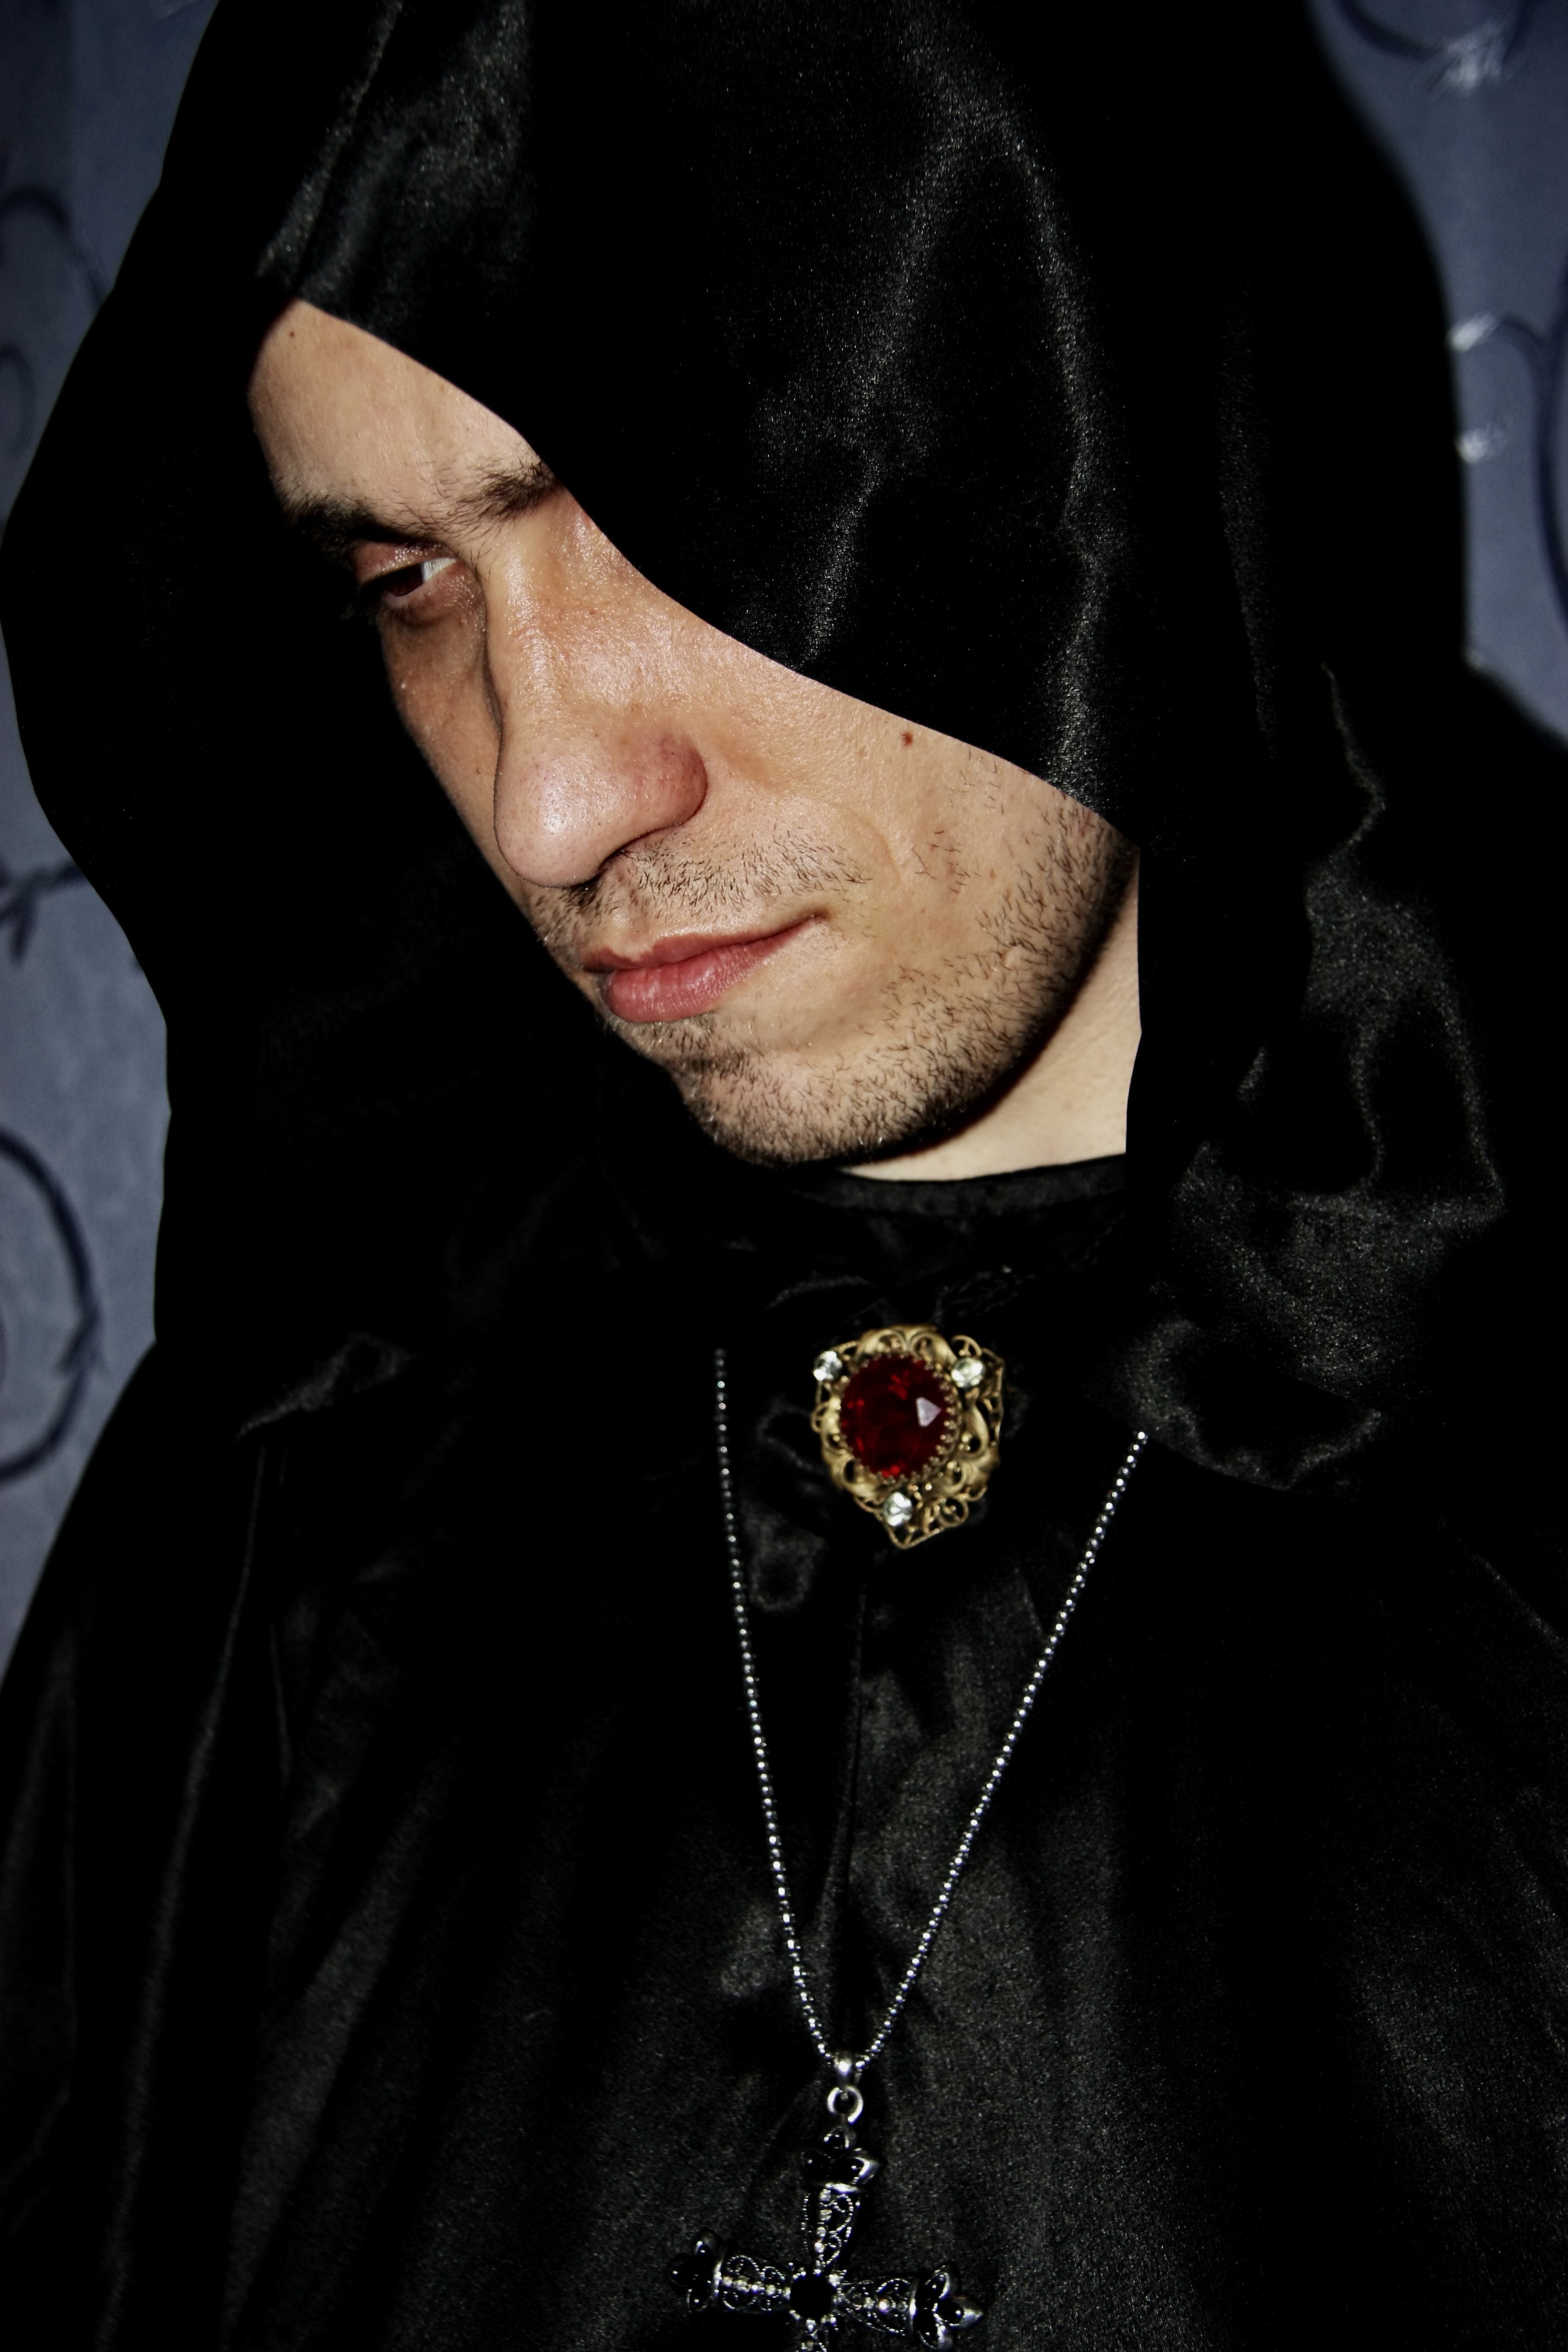 Man wearing black hooded jacket